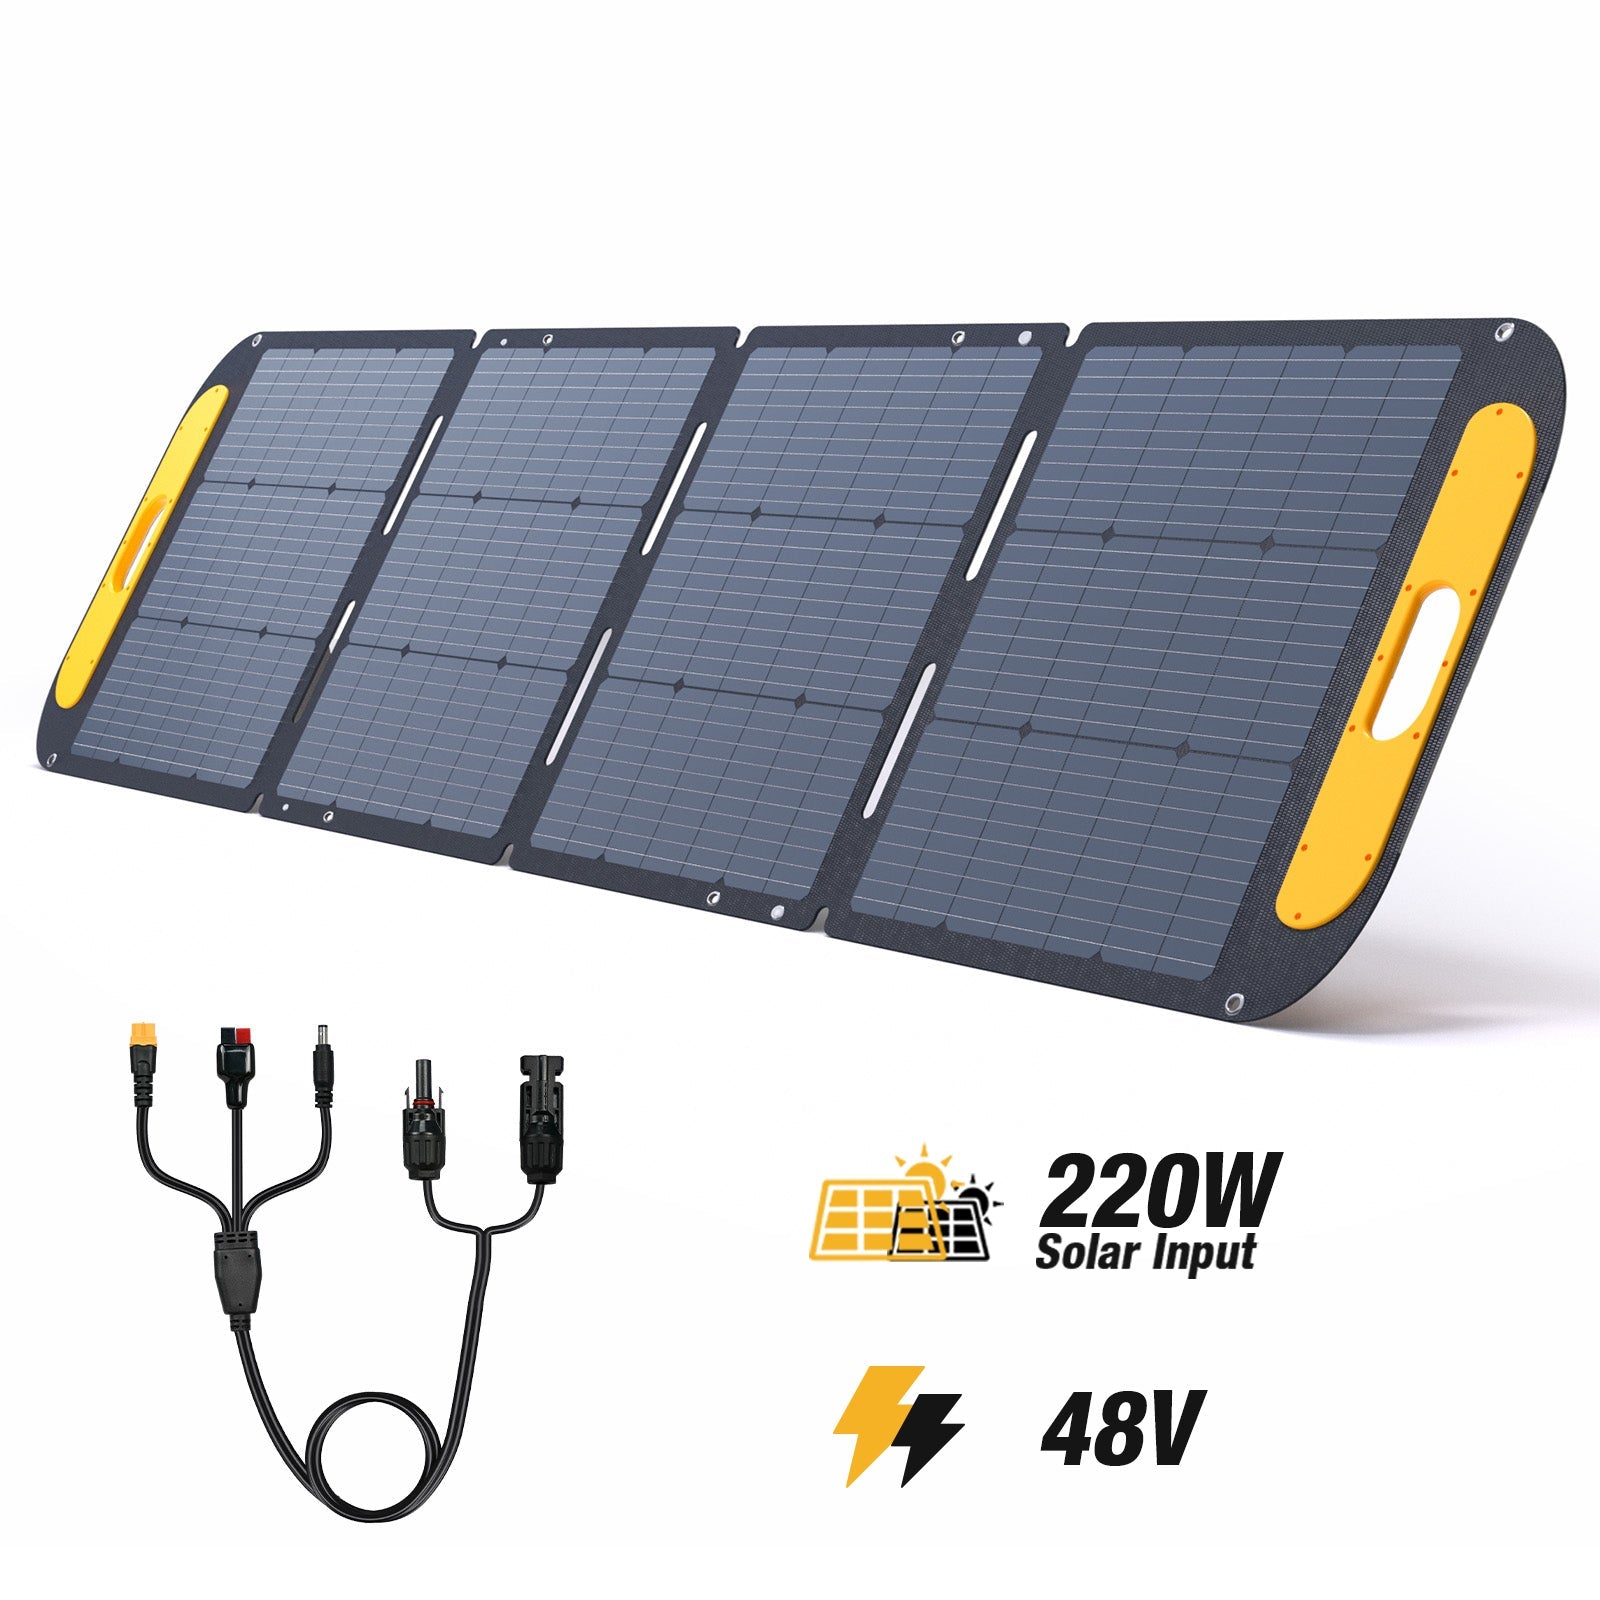 vtoman vs220pro-220w-48v solar panel